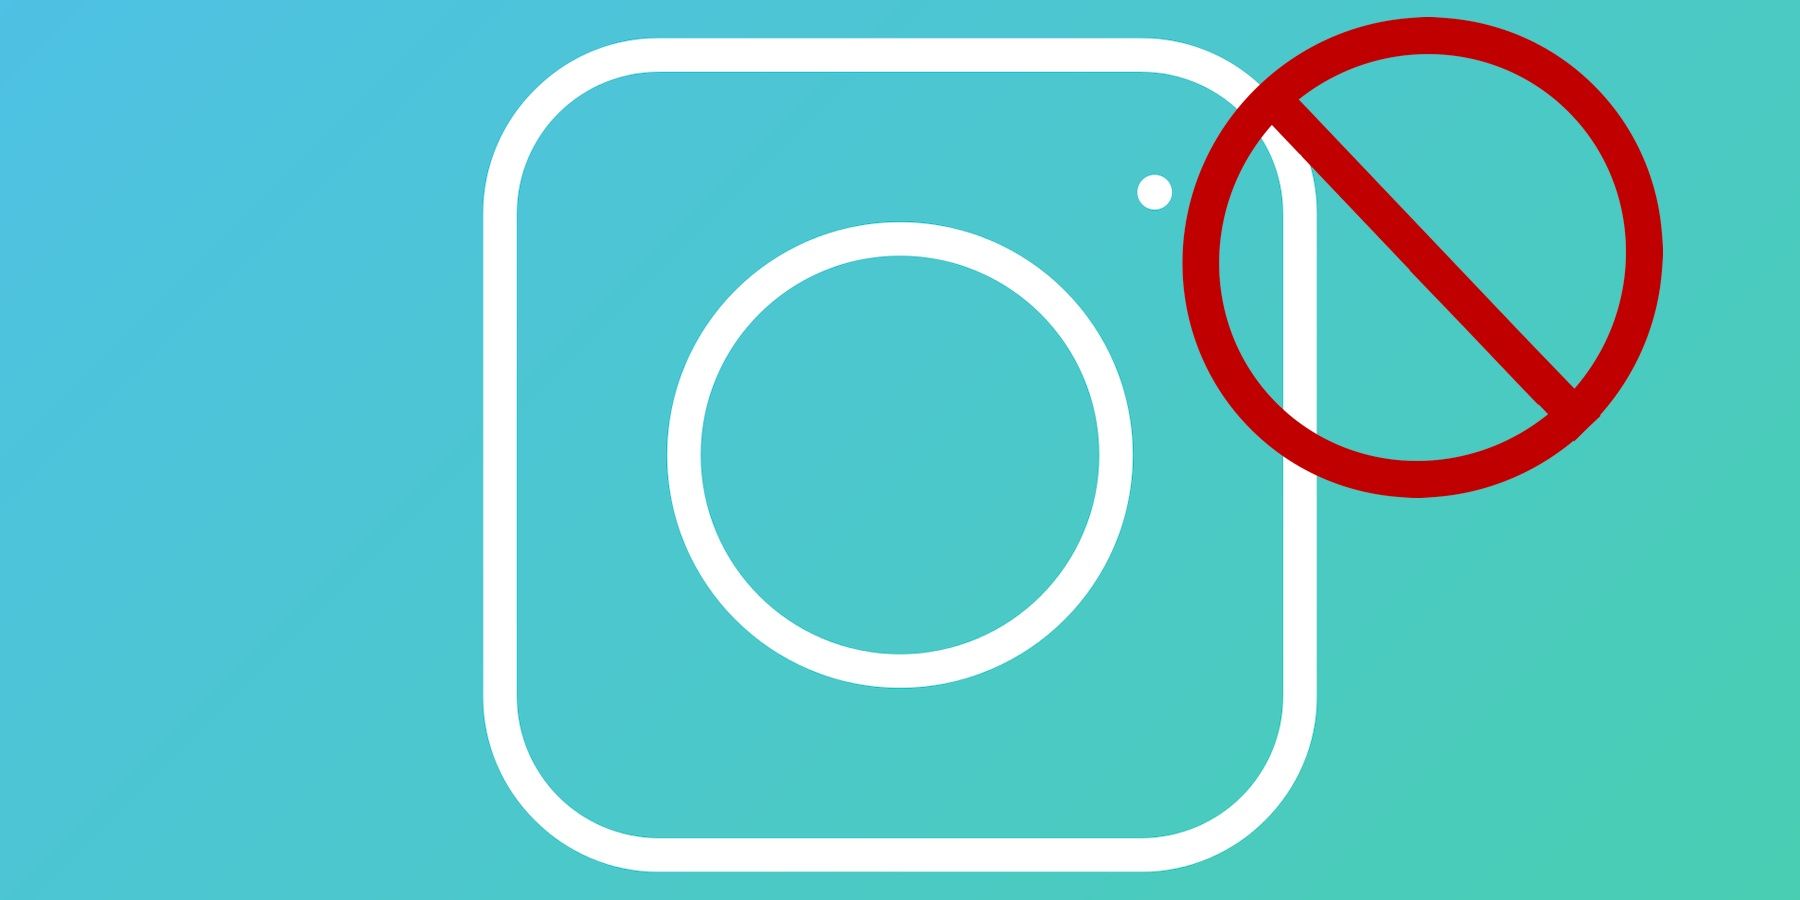 Instagram logo on blue background next to a blocked symbol